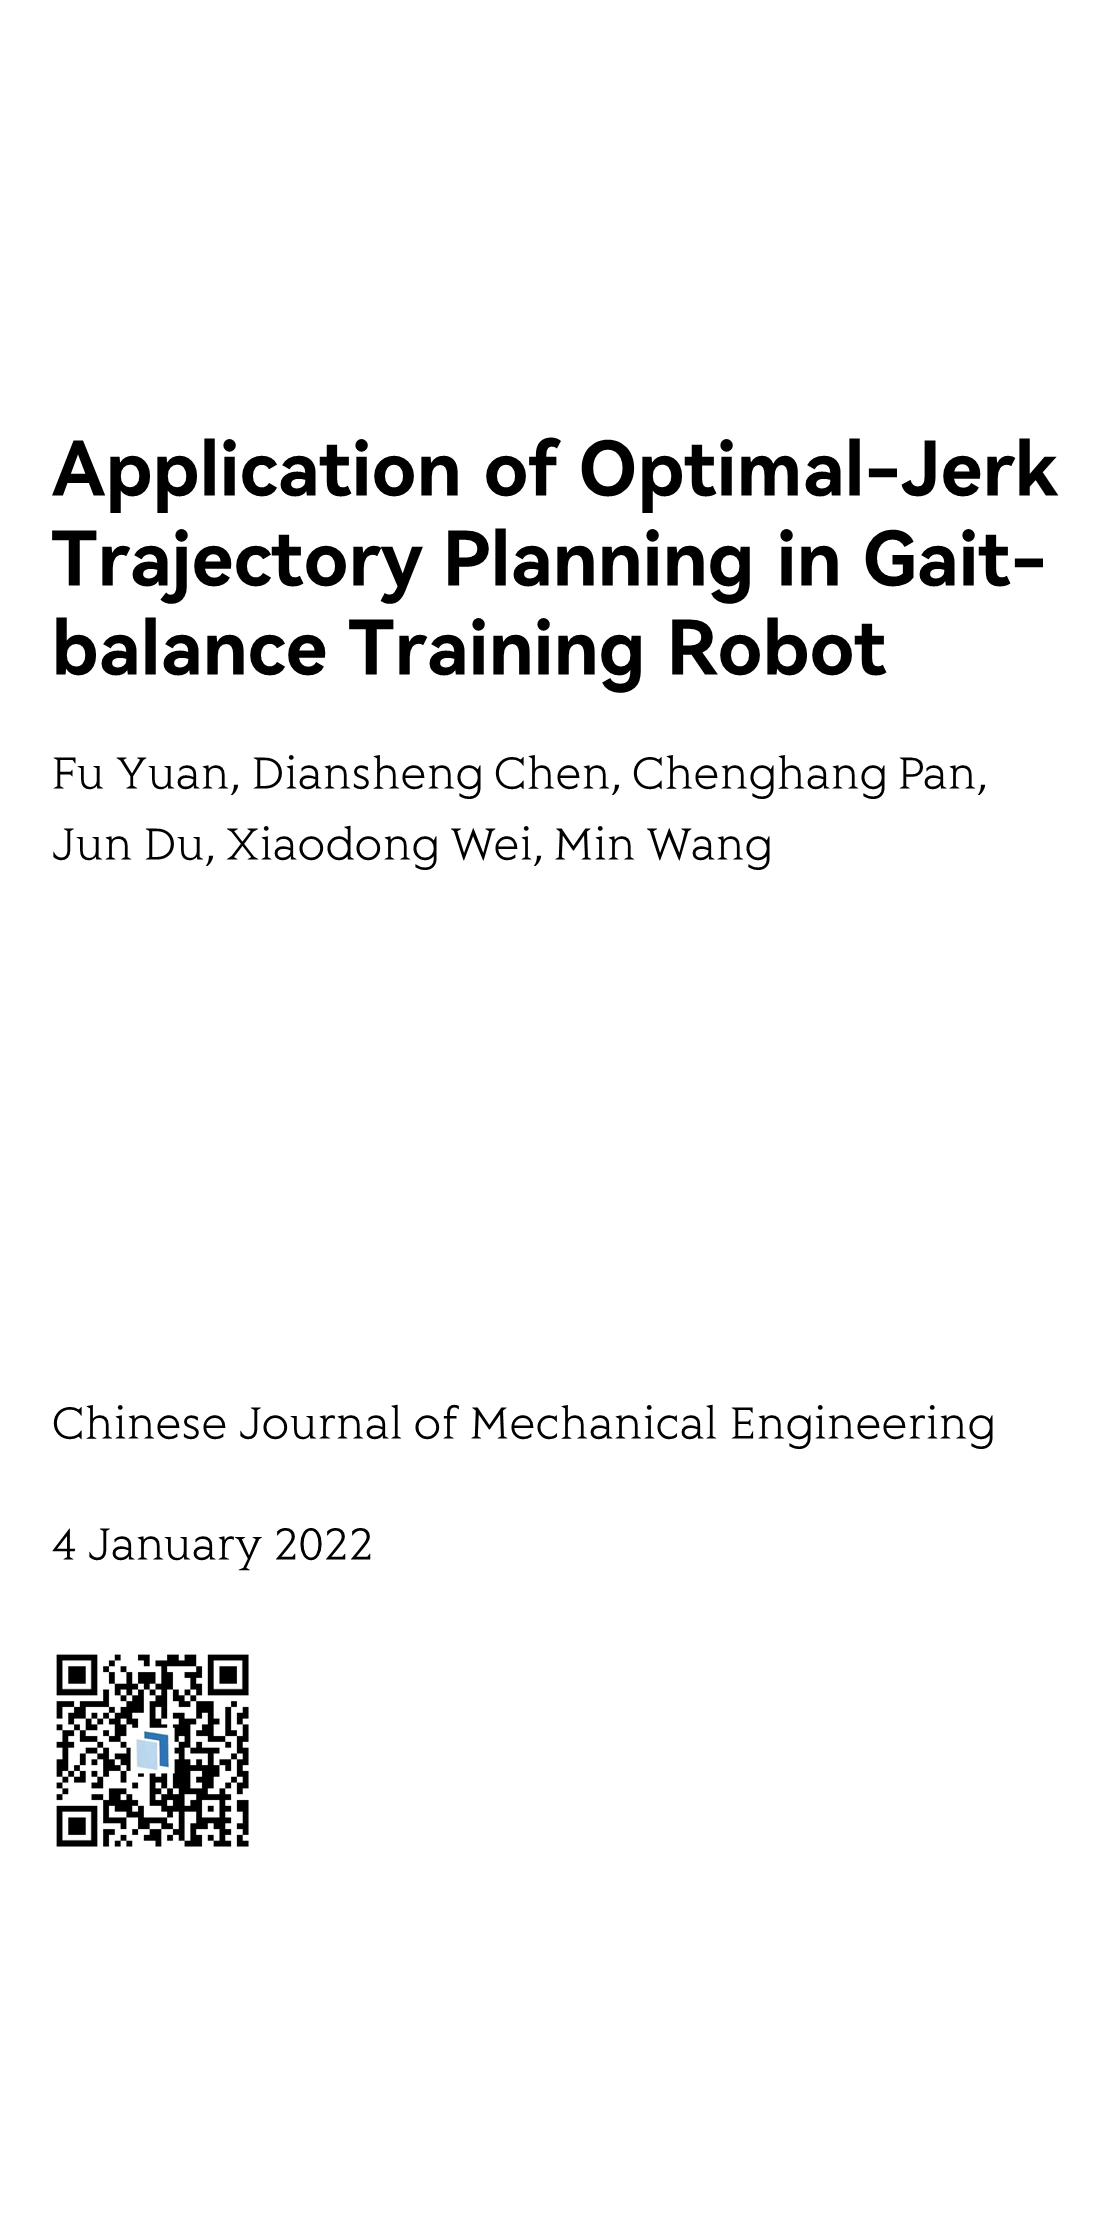 Application of Optimal-Jerk Trajectory Planning in Gait-balance Training Robot_1